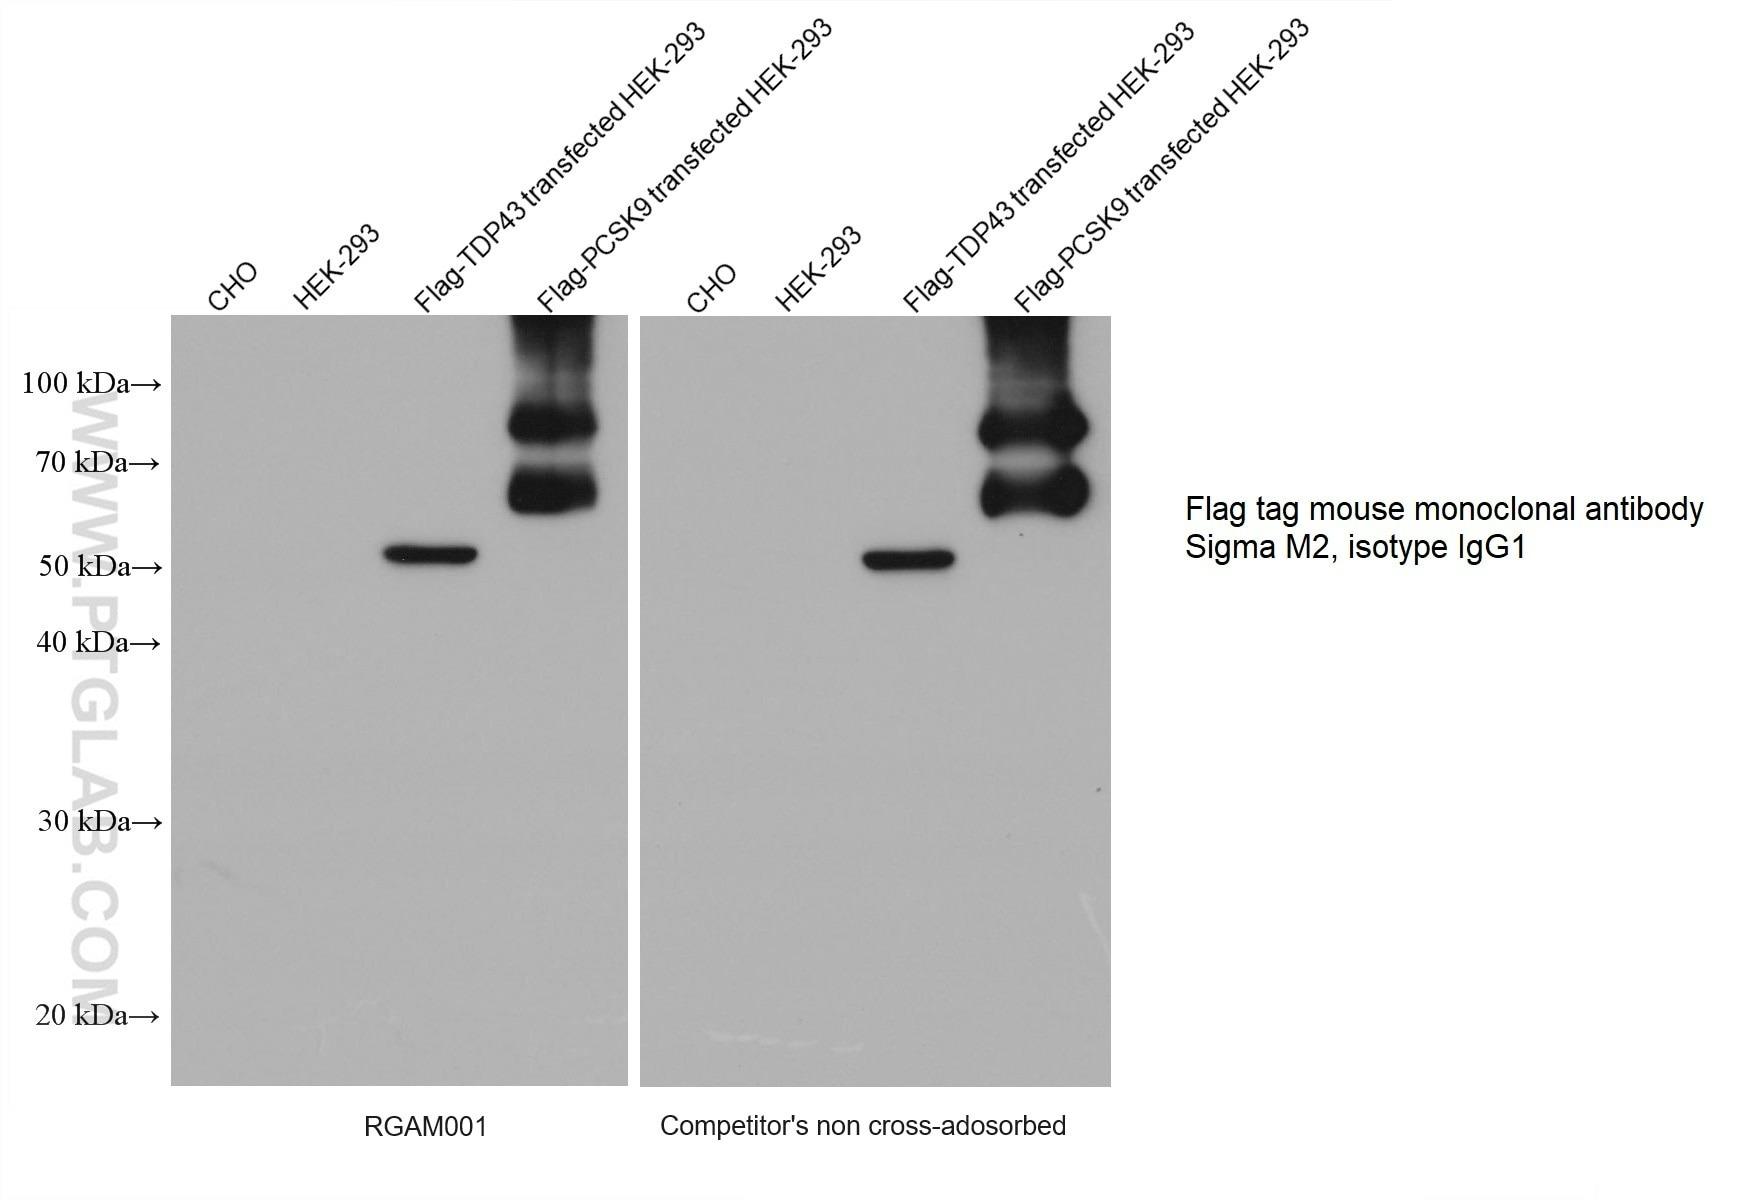 Multi-rAb HRP標識抗マウスIgG二次抗体と競合他社製品（非吸着処理製品）を用いたFlag tag抗体免疫沈降後サンプルの化学発光ウェスタンブロット（WB）結果の比較